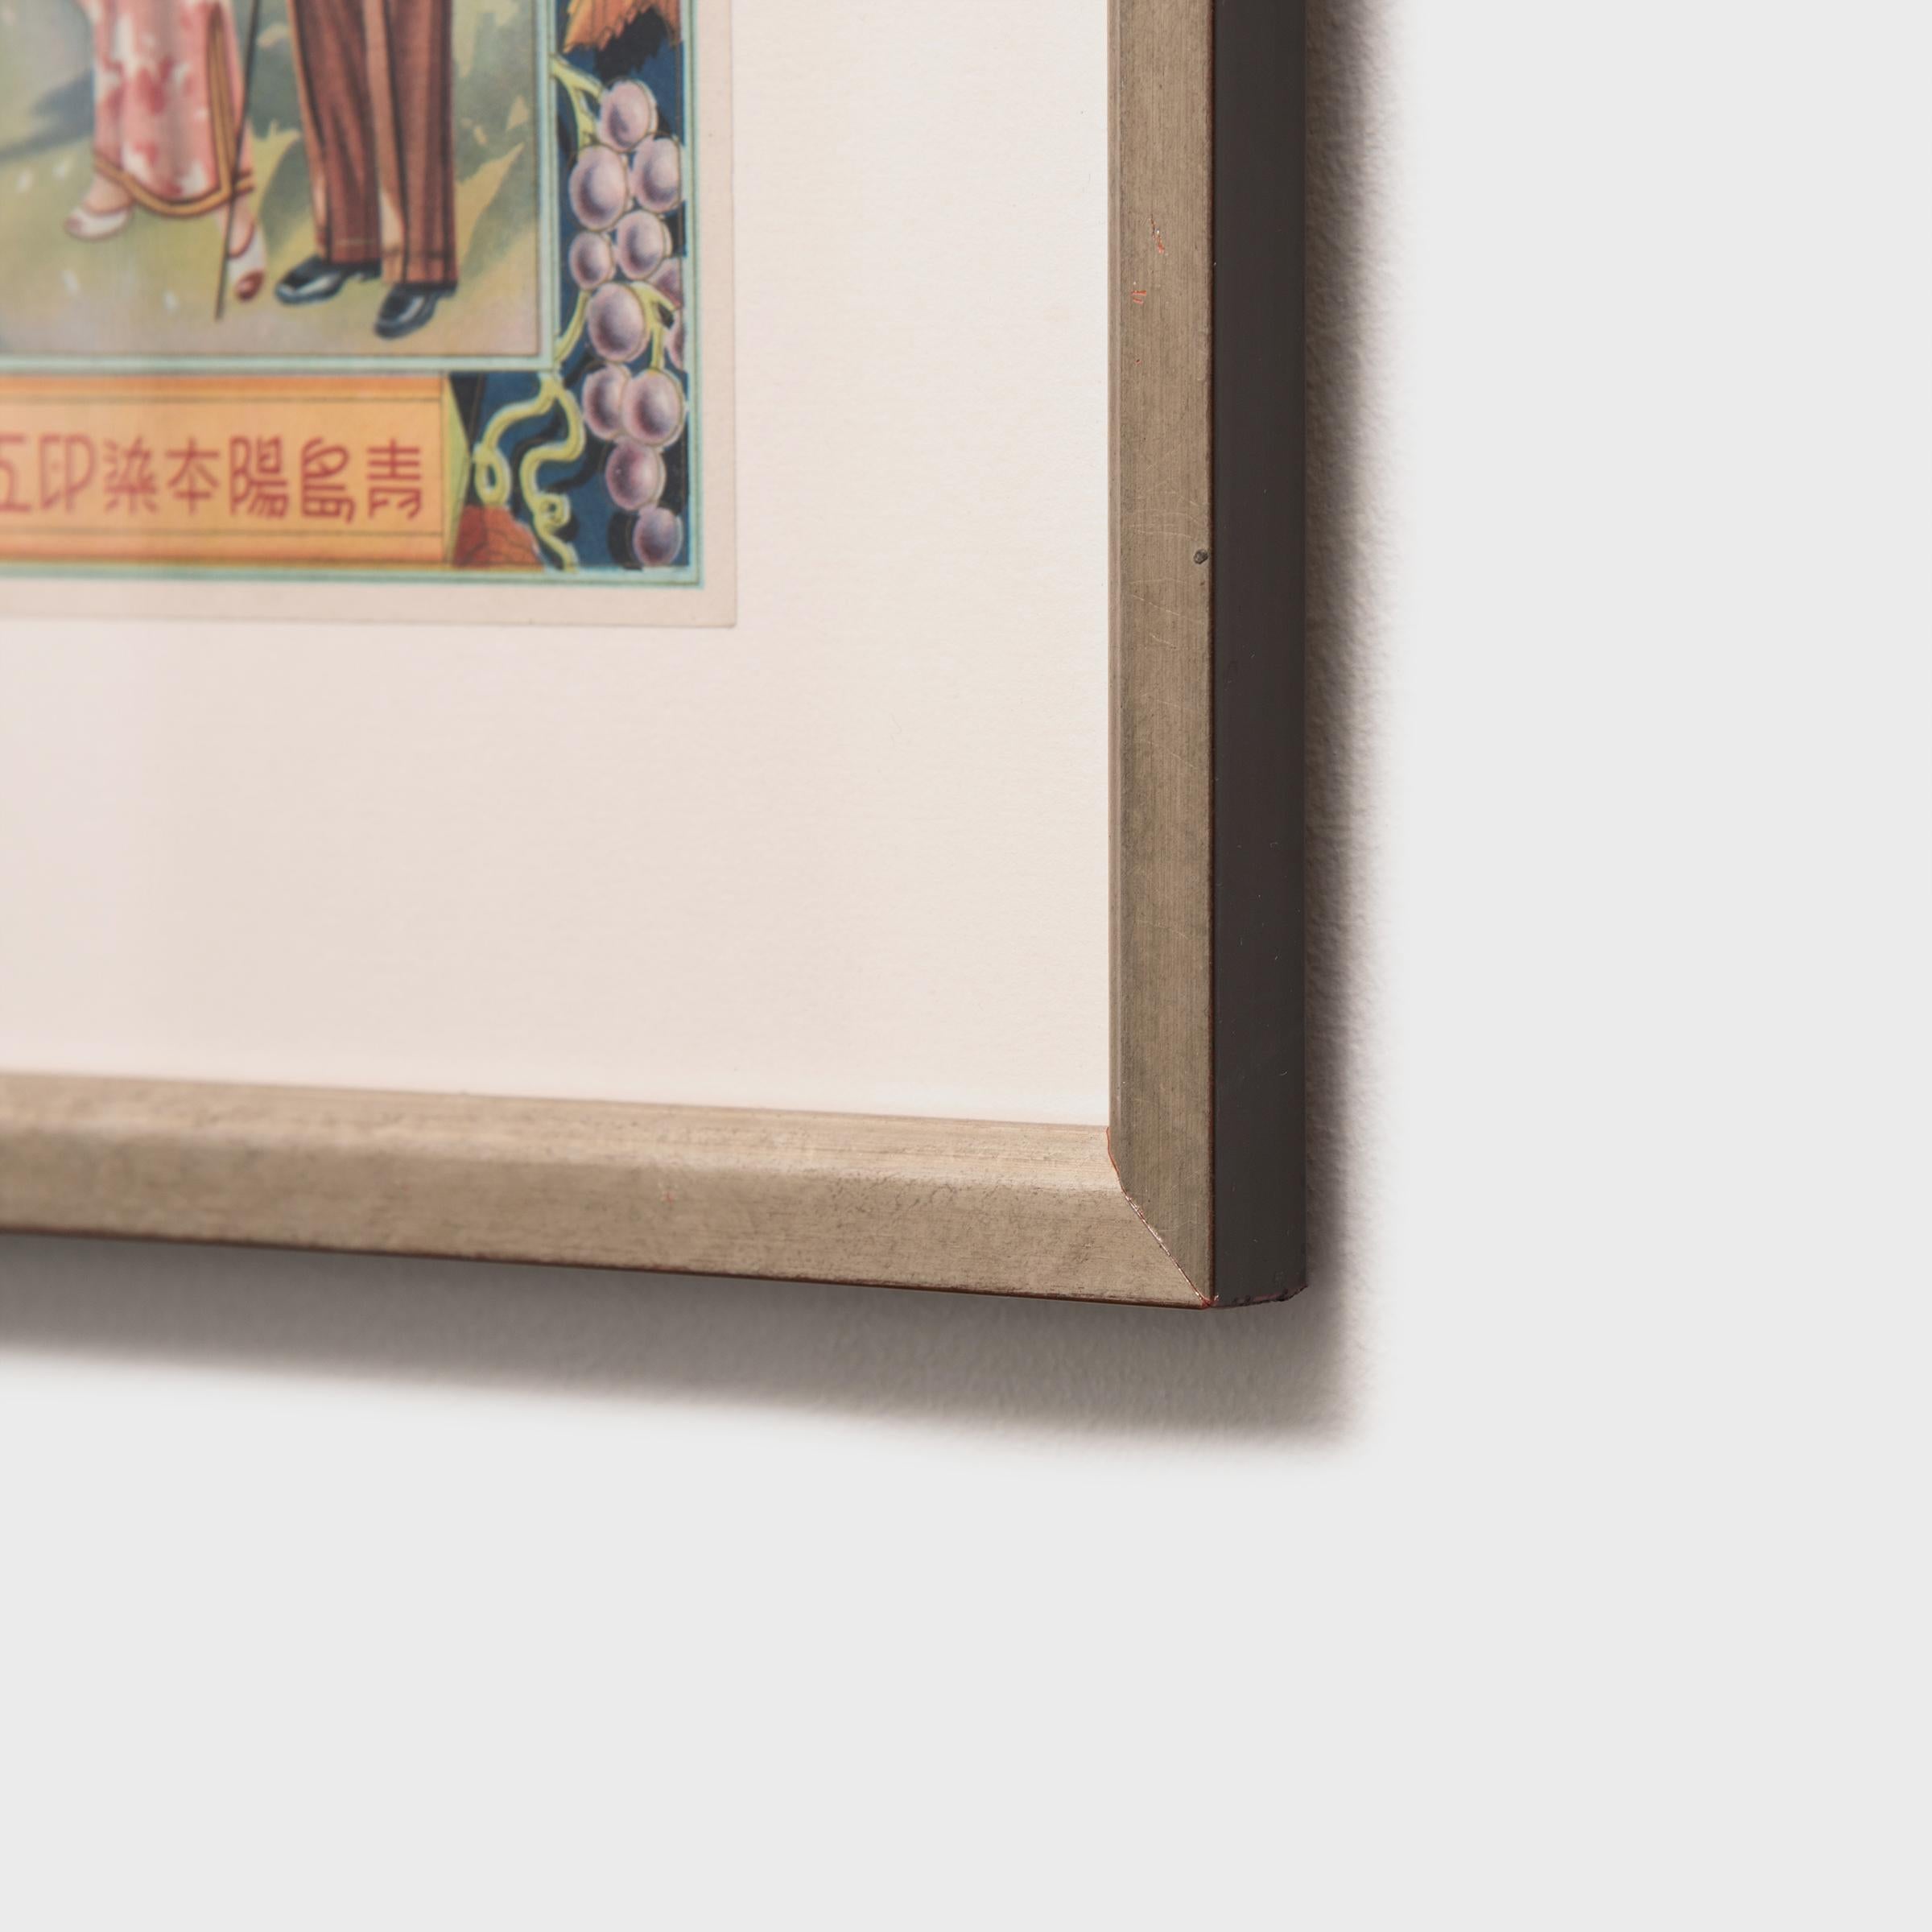 Vintage Chinese Republic Period Advertisement - Beige Portrait Print by Unknown